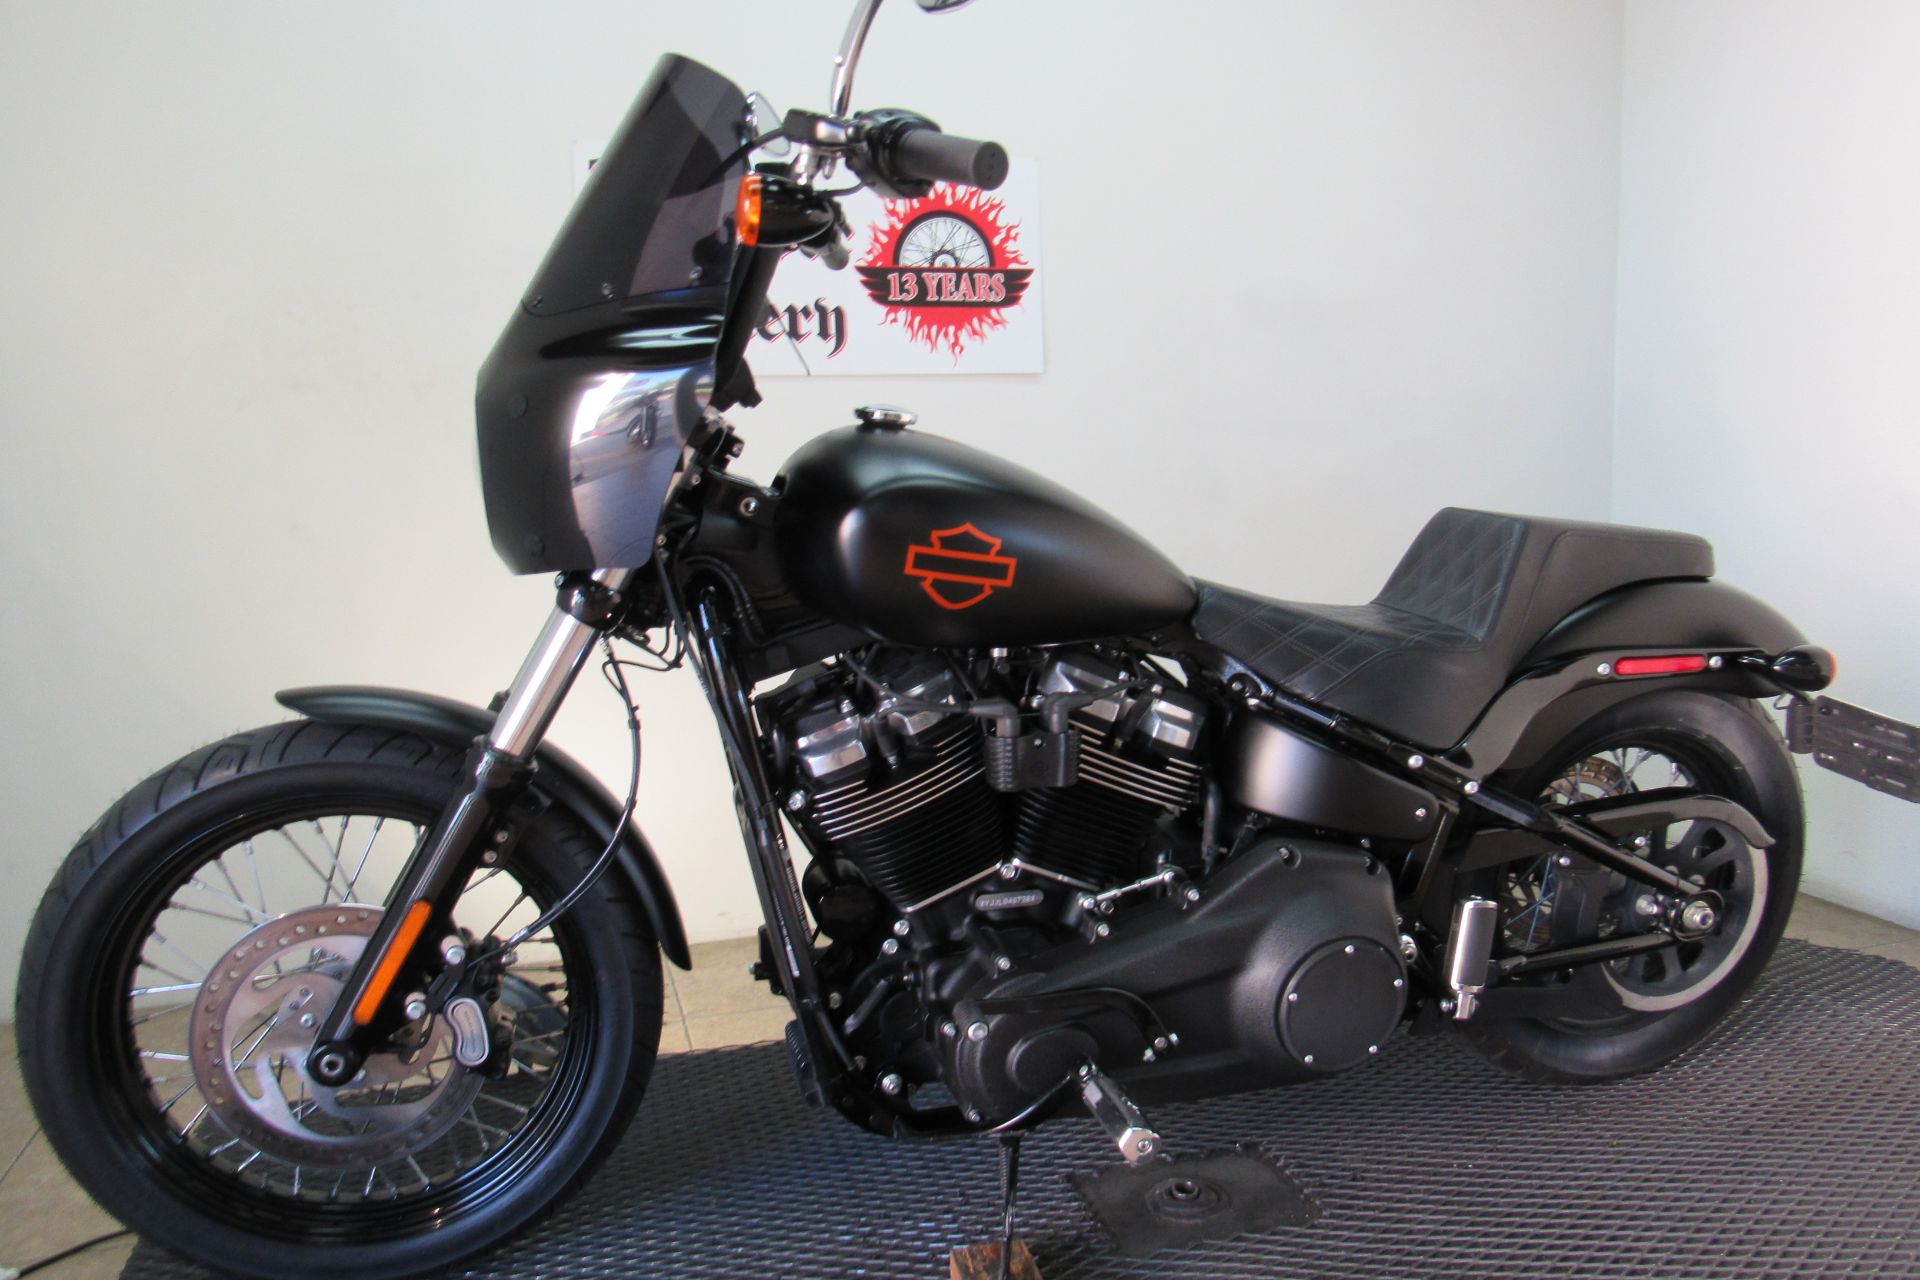 2020 Harley-Davidson Street Bob® in Temecula, California - Photo 4